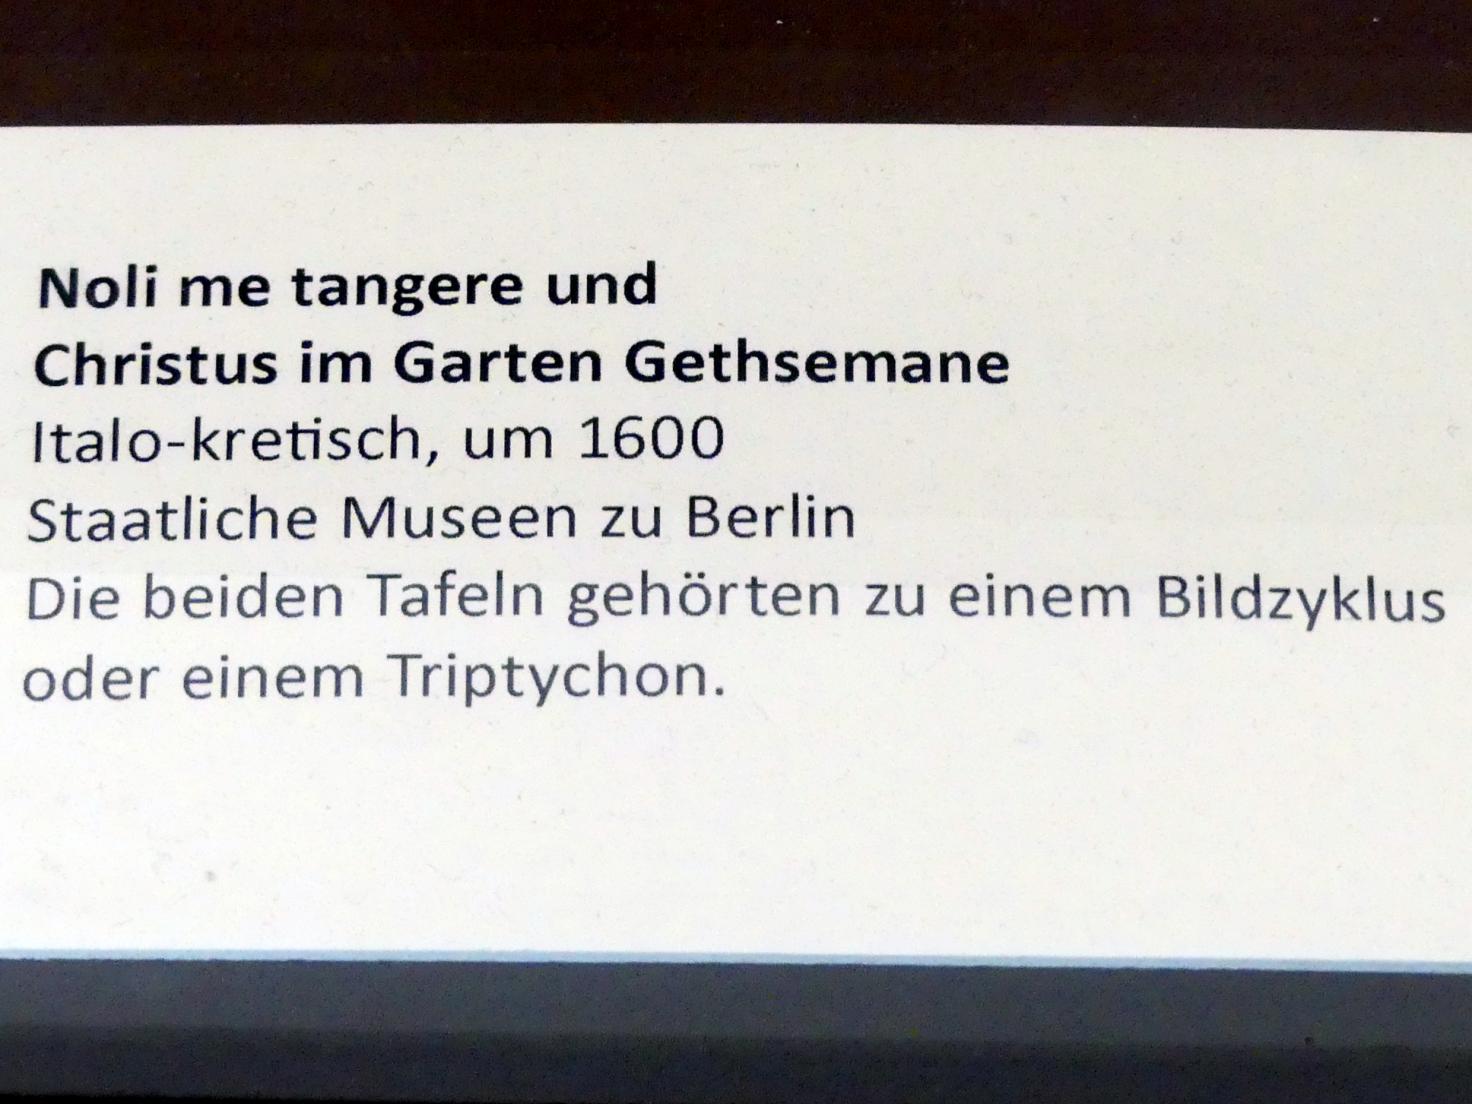 Noli me tangere und Christus im Garten Gethsemane, Frankfurt am Main, Ikonen-Museum, Erdgeschoss, um 1600, Bild 4/4